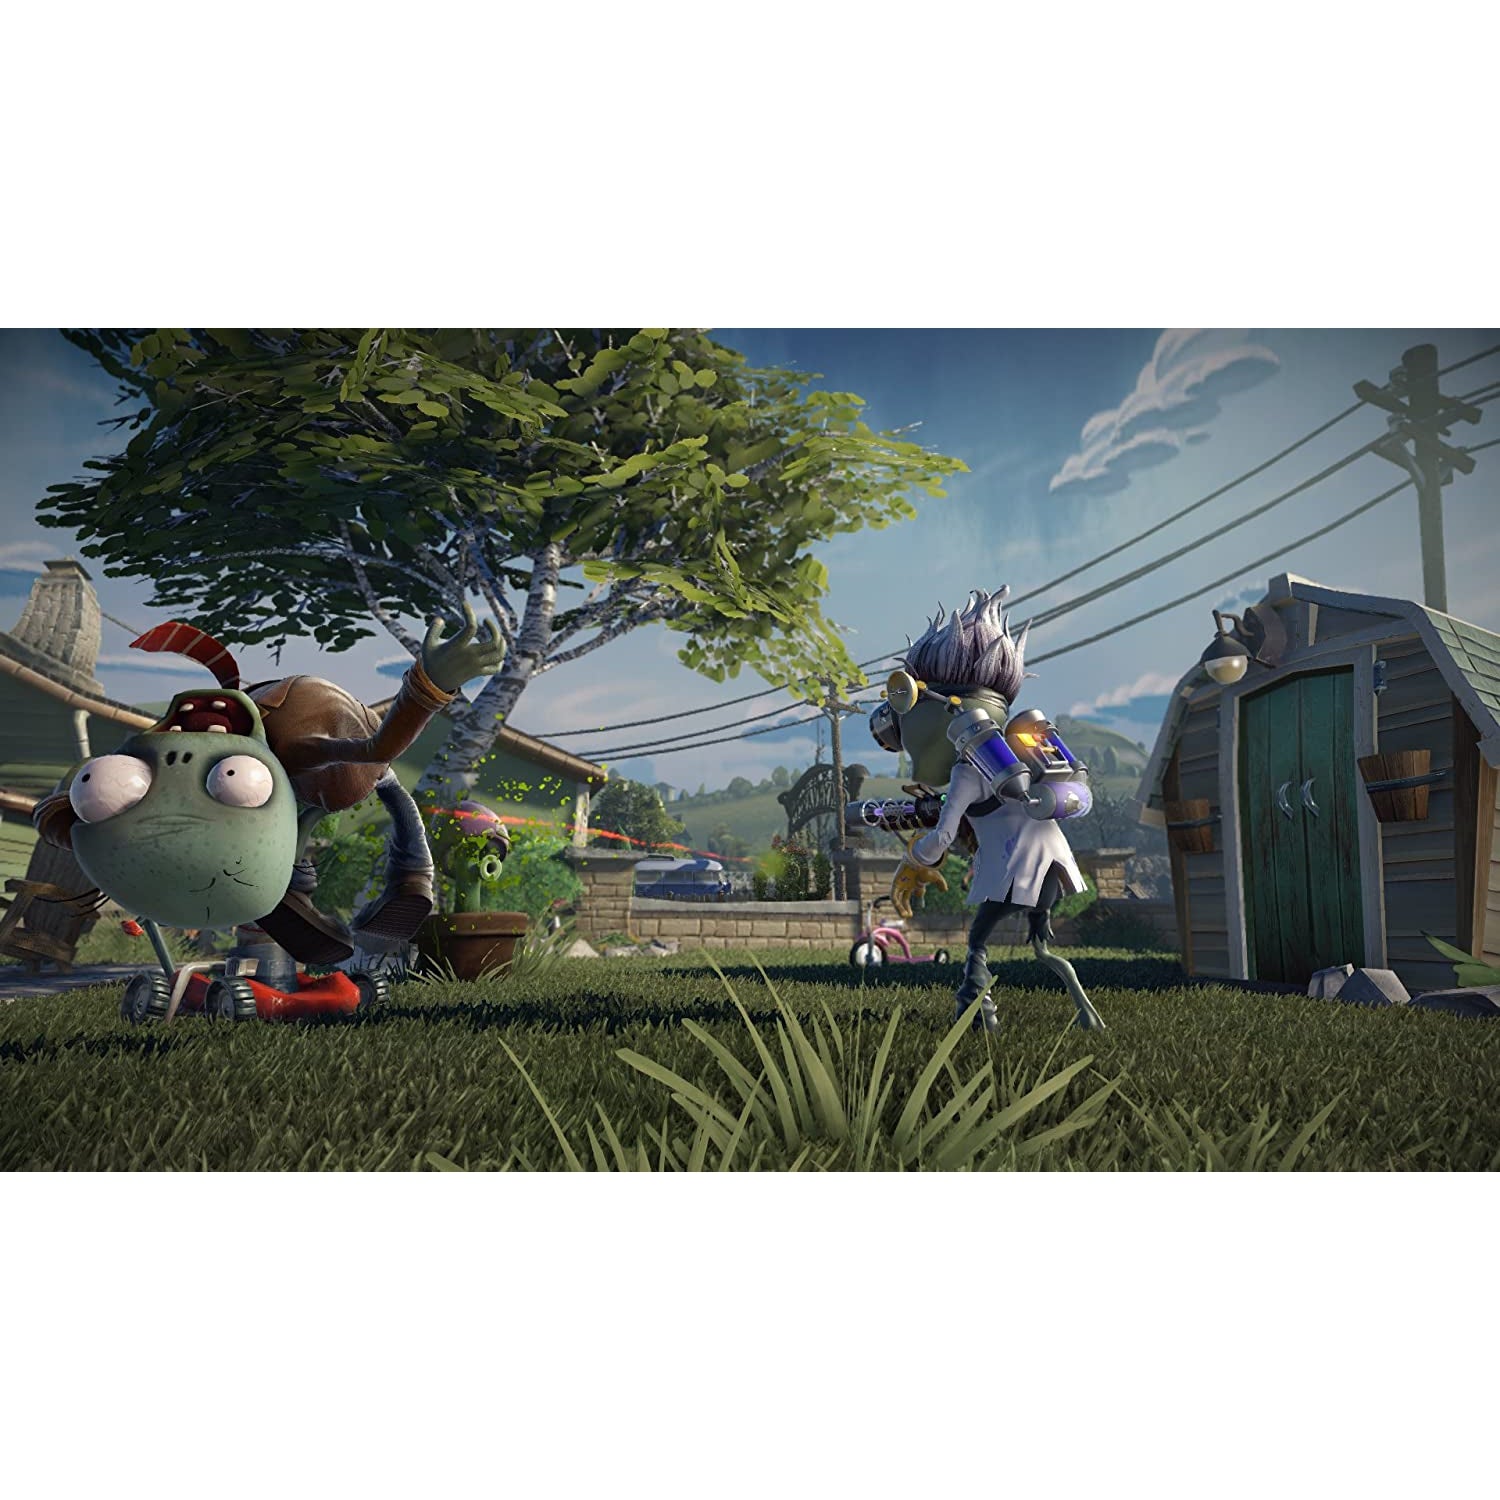 Plants Vs Zombies: Garden Warfare (Xbox 360)